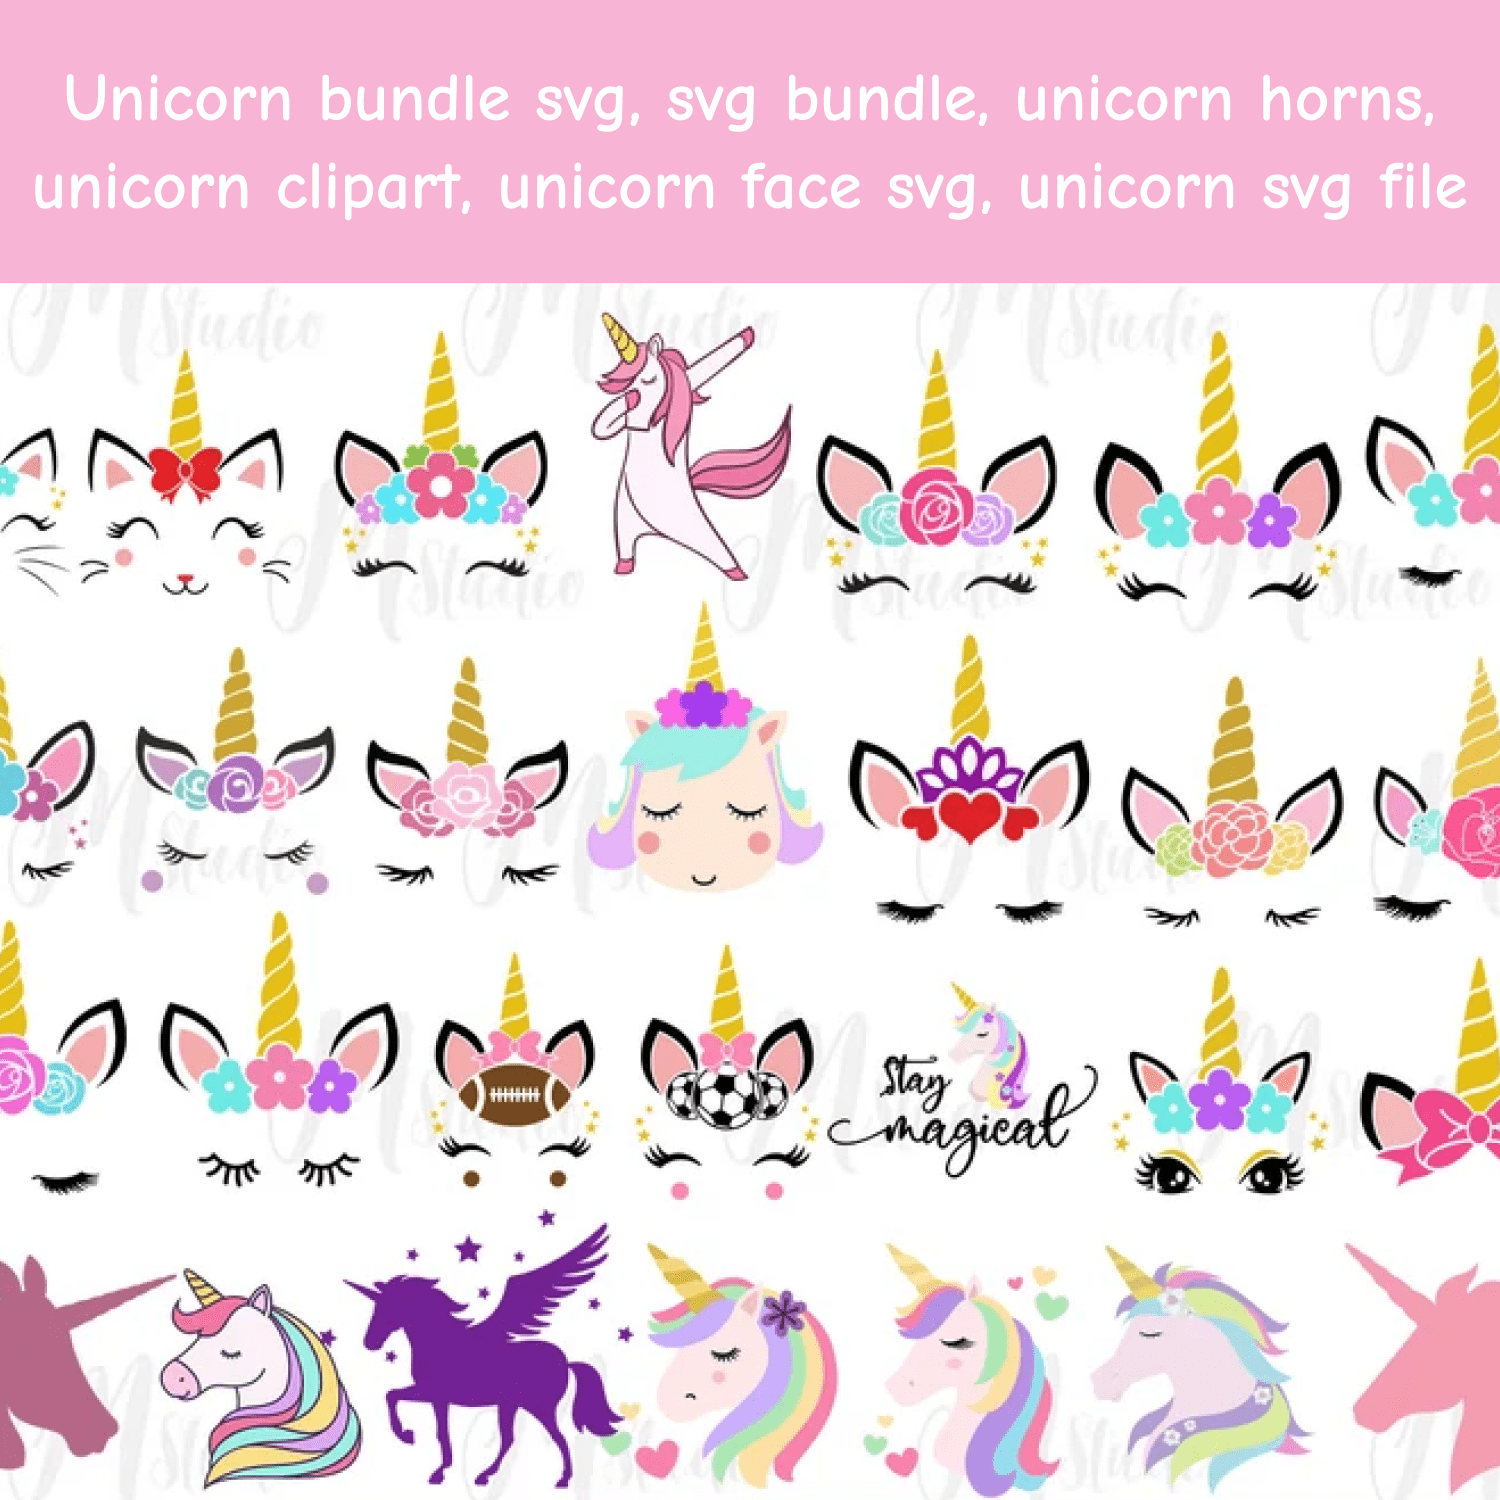 unicorn bundle svg cover.